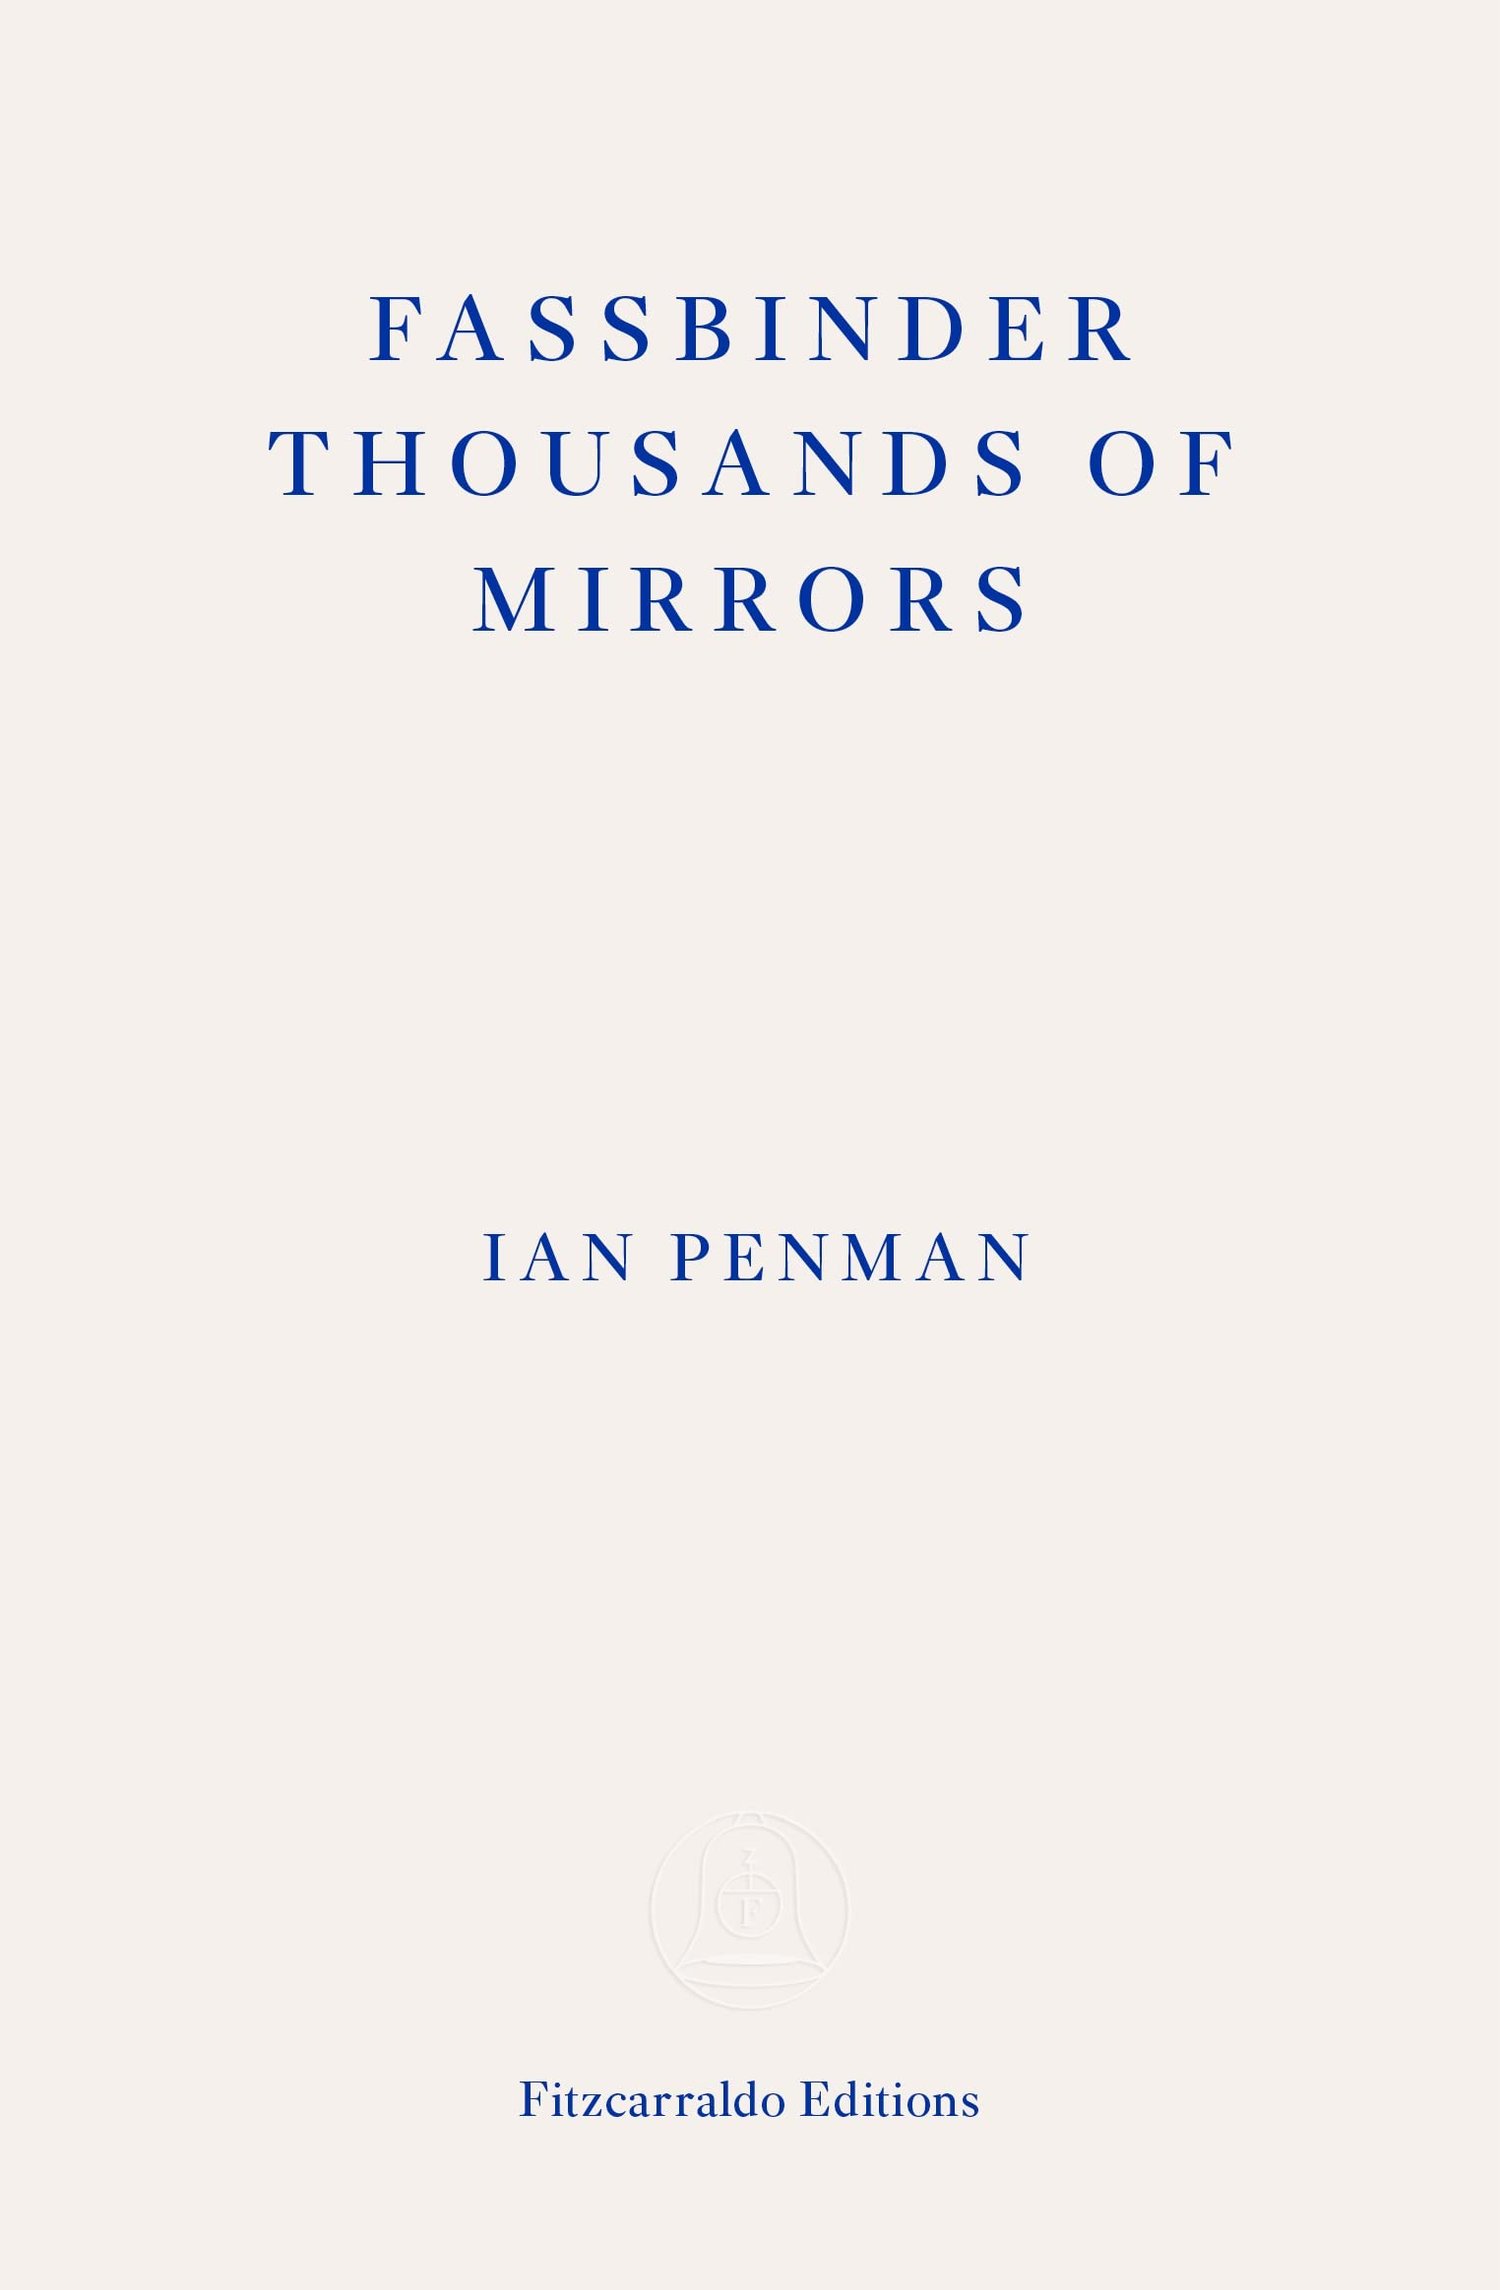 Fassbinder Thousands of Mirrors by Ian Penman — lunate